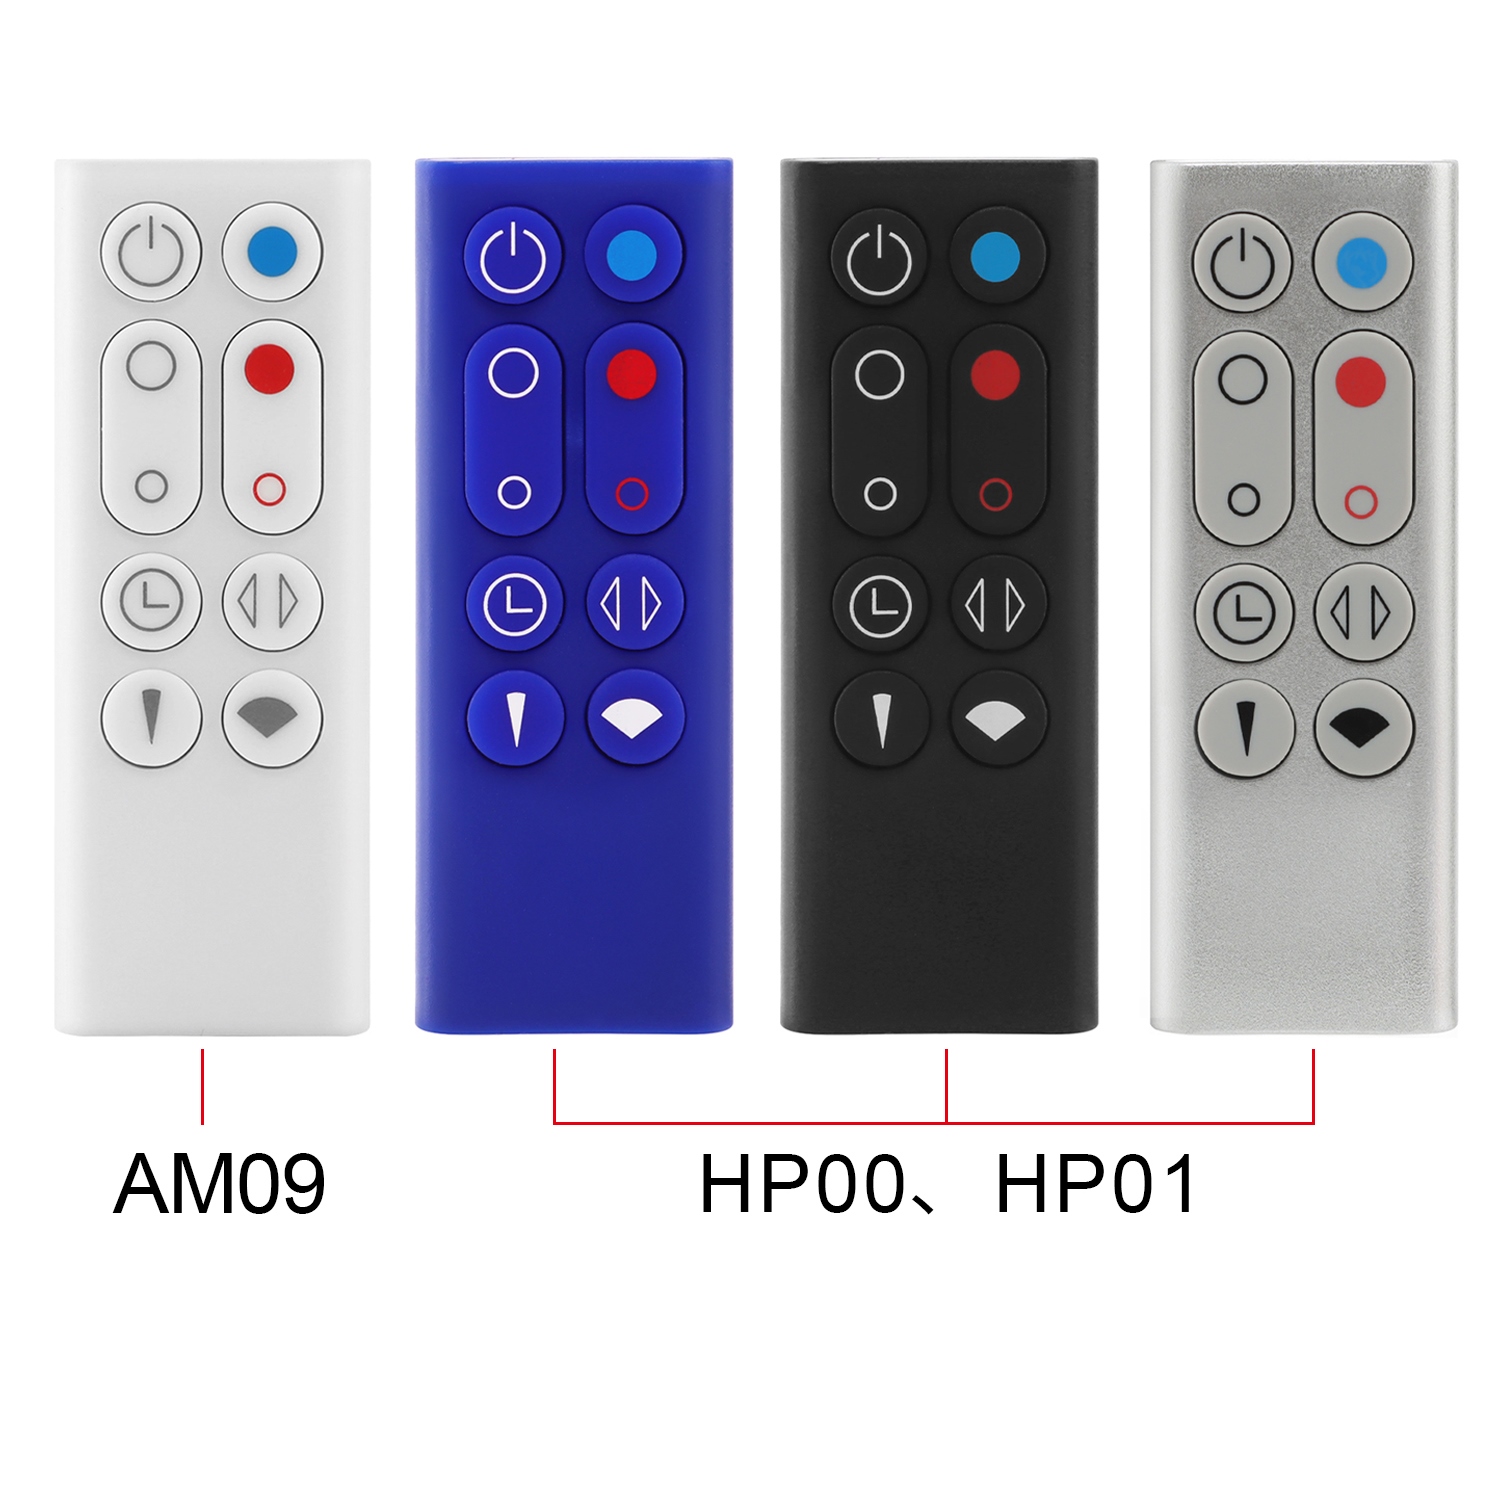  RC1900 Remote Control Suitable for OKI TV 16,19,22,24,26,32  Inch,37,40,46,V19,L19,C19,V22,L22,V24,L24,V26,L26,C26,V32,L32,C32 V37 :  Electronics